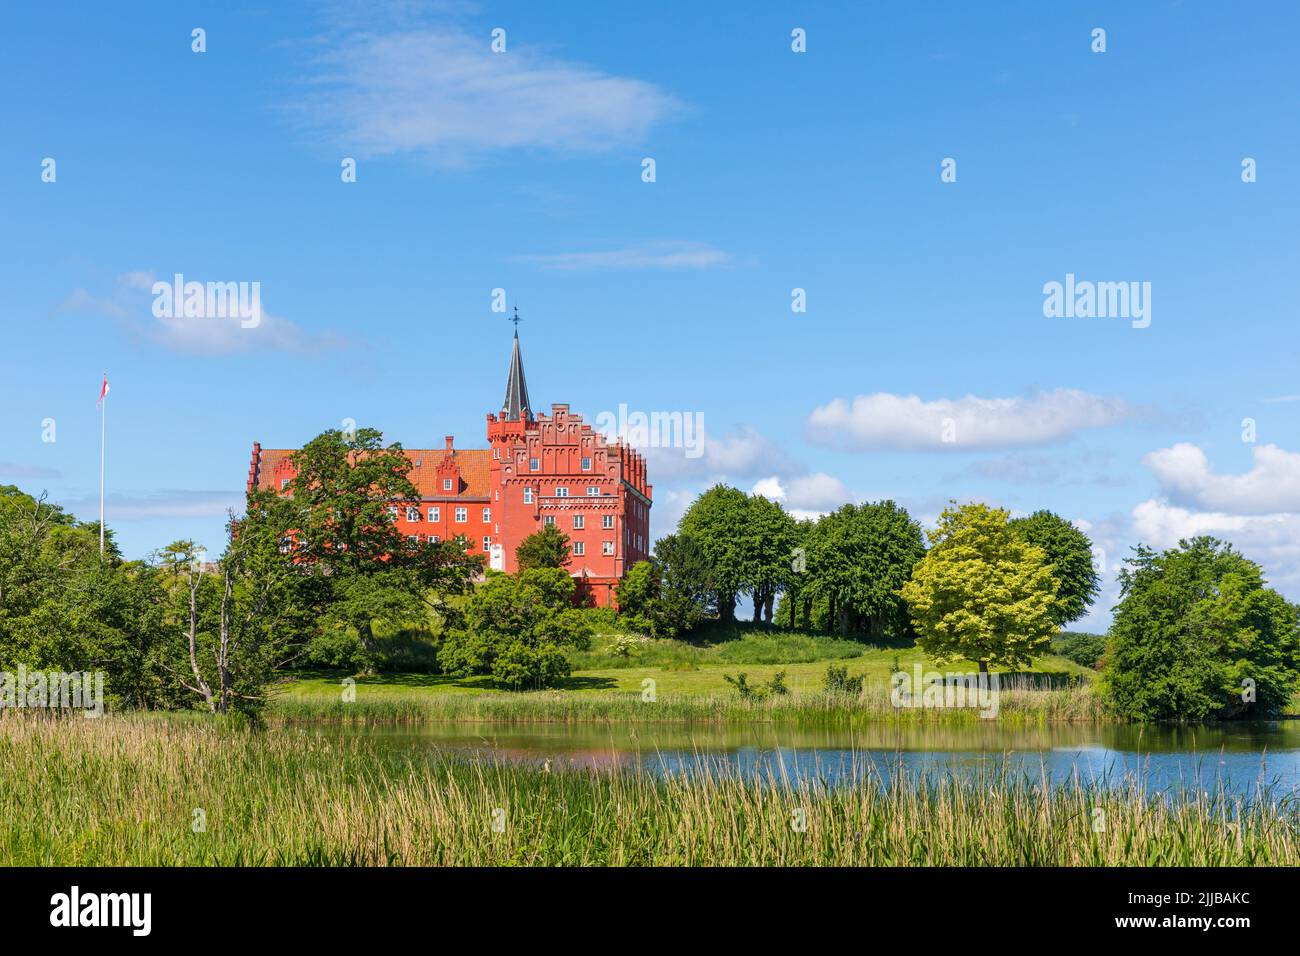 13th century castle and parl at Tranekær, island of Langeland, Denmark Stock Photo